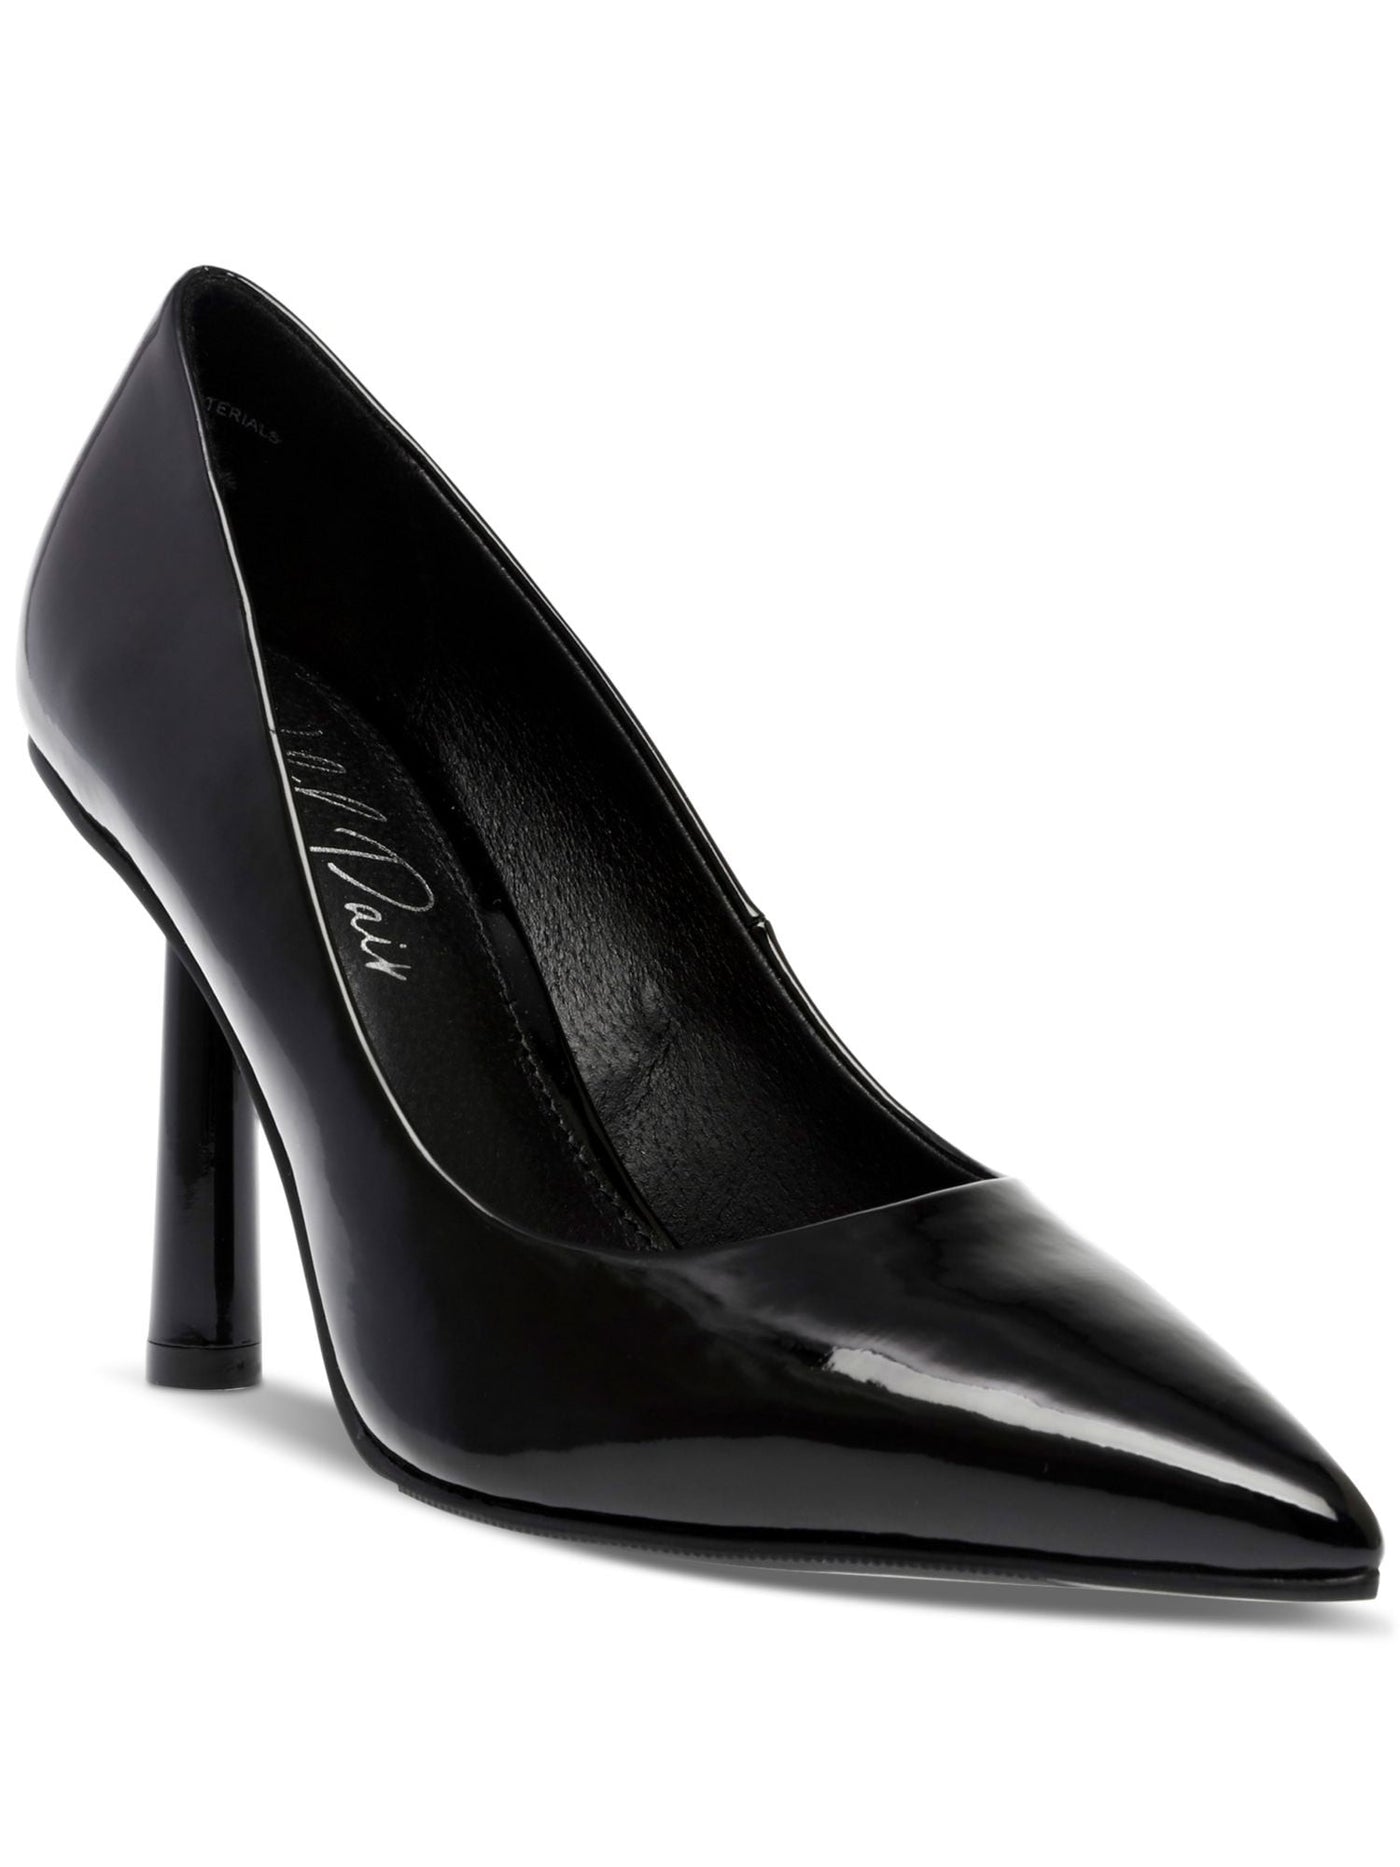 WILD PAIR Womens Black Slip Resistant Comfort Taraa Pointed Toe Stiletto Slip On Pumps Shoes 5 M